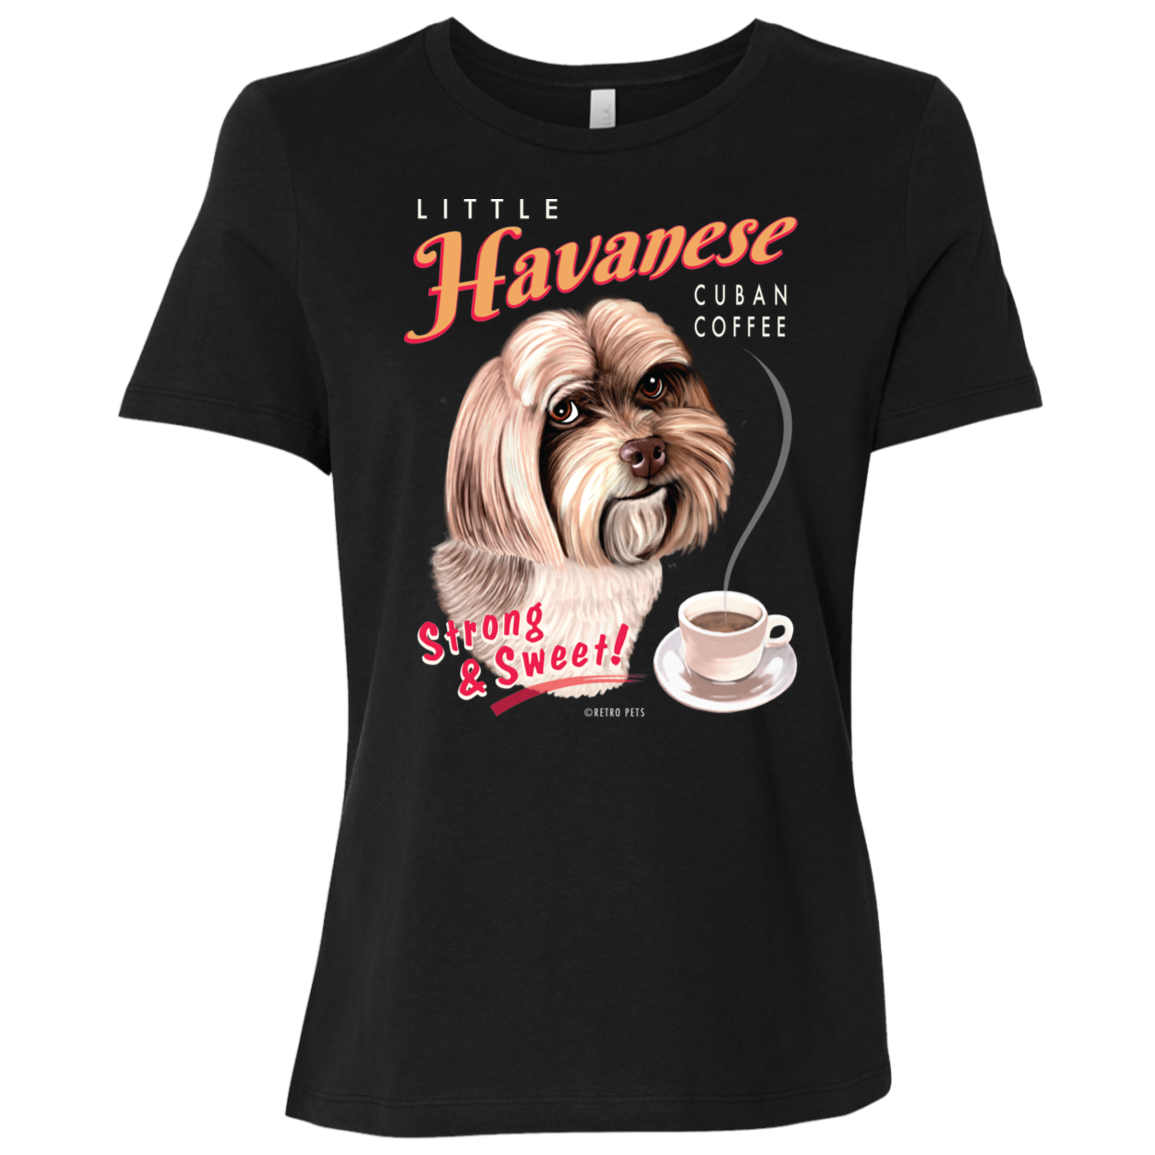 Havanese "Cuban Coffee" Short-Sleeve T-Shirt